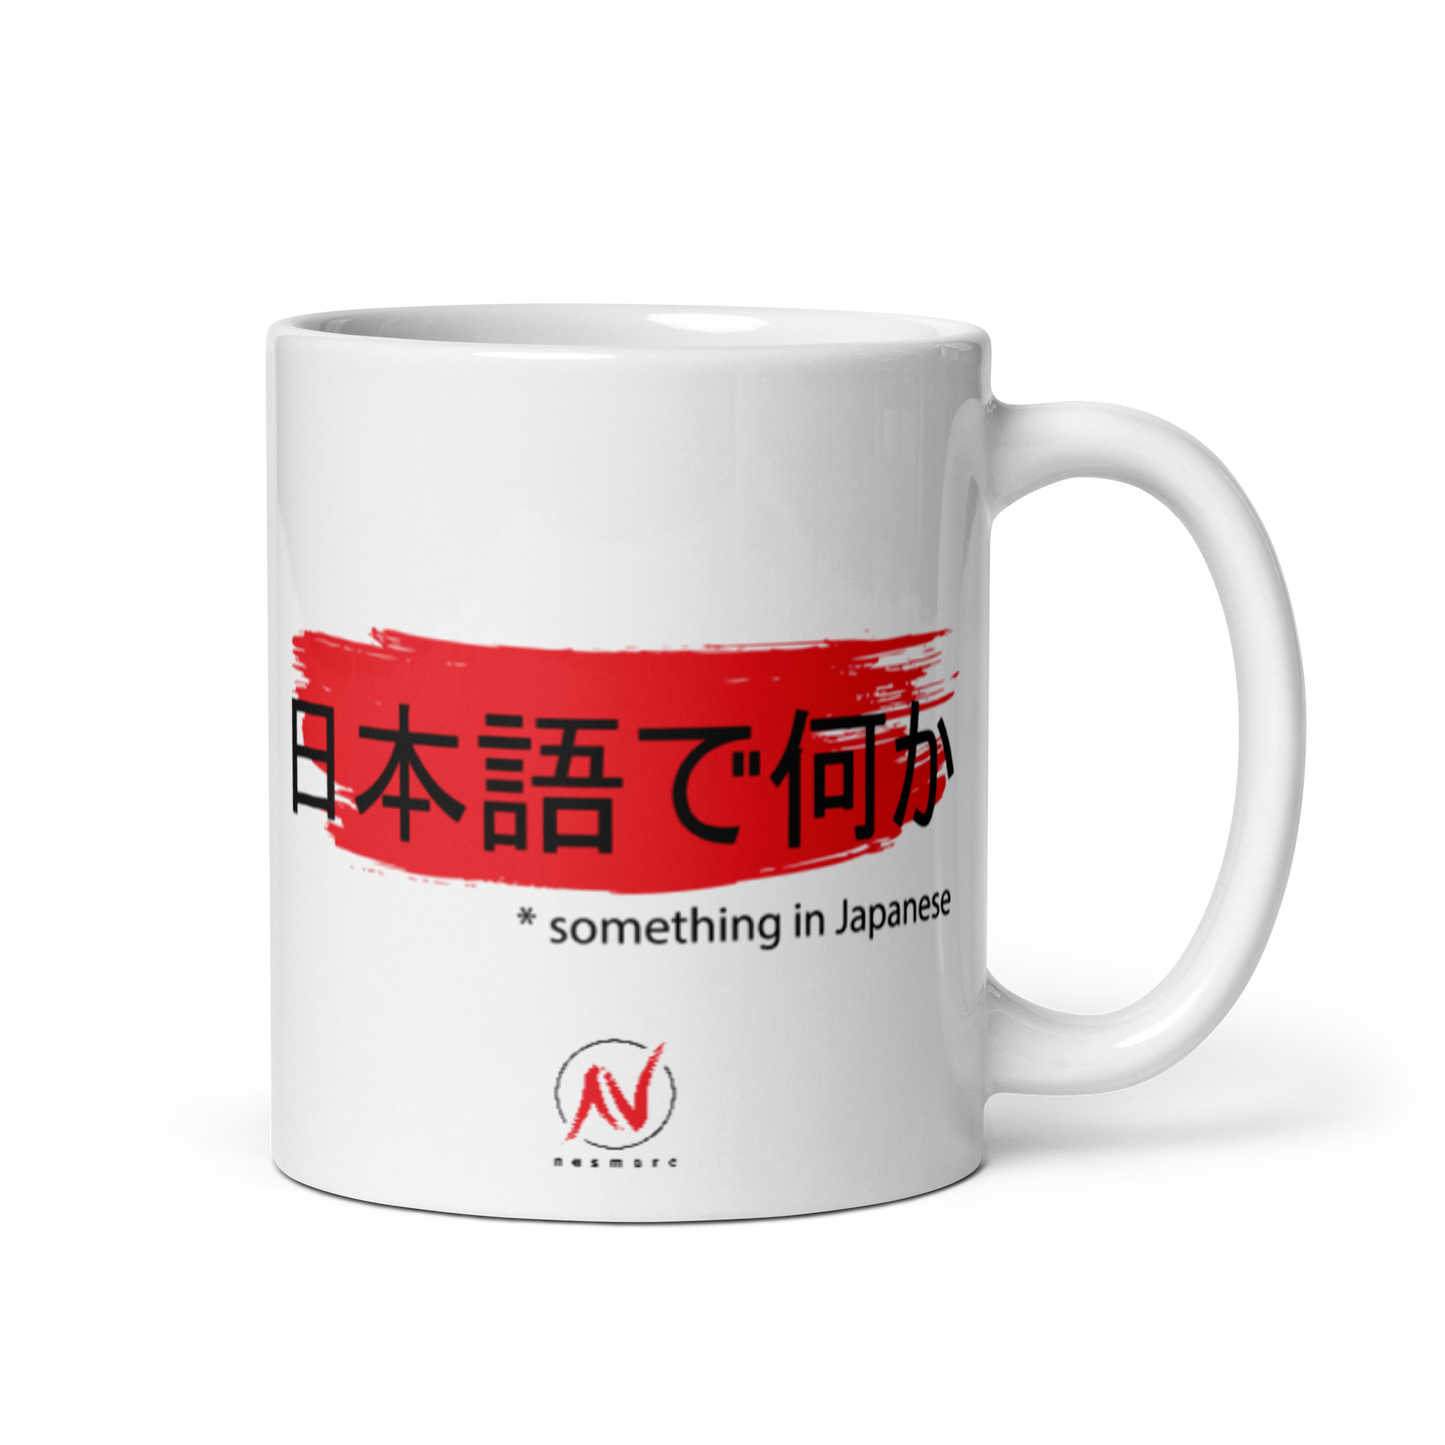 "Something in Japanese" White glossy mug